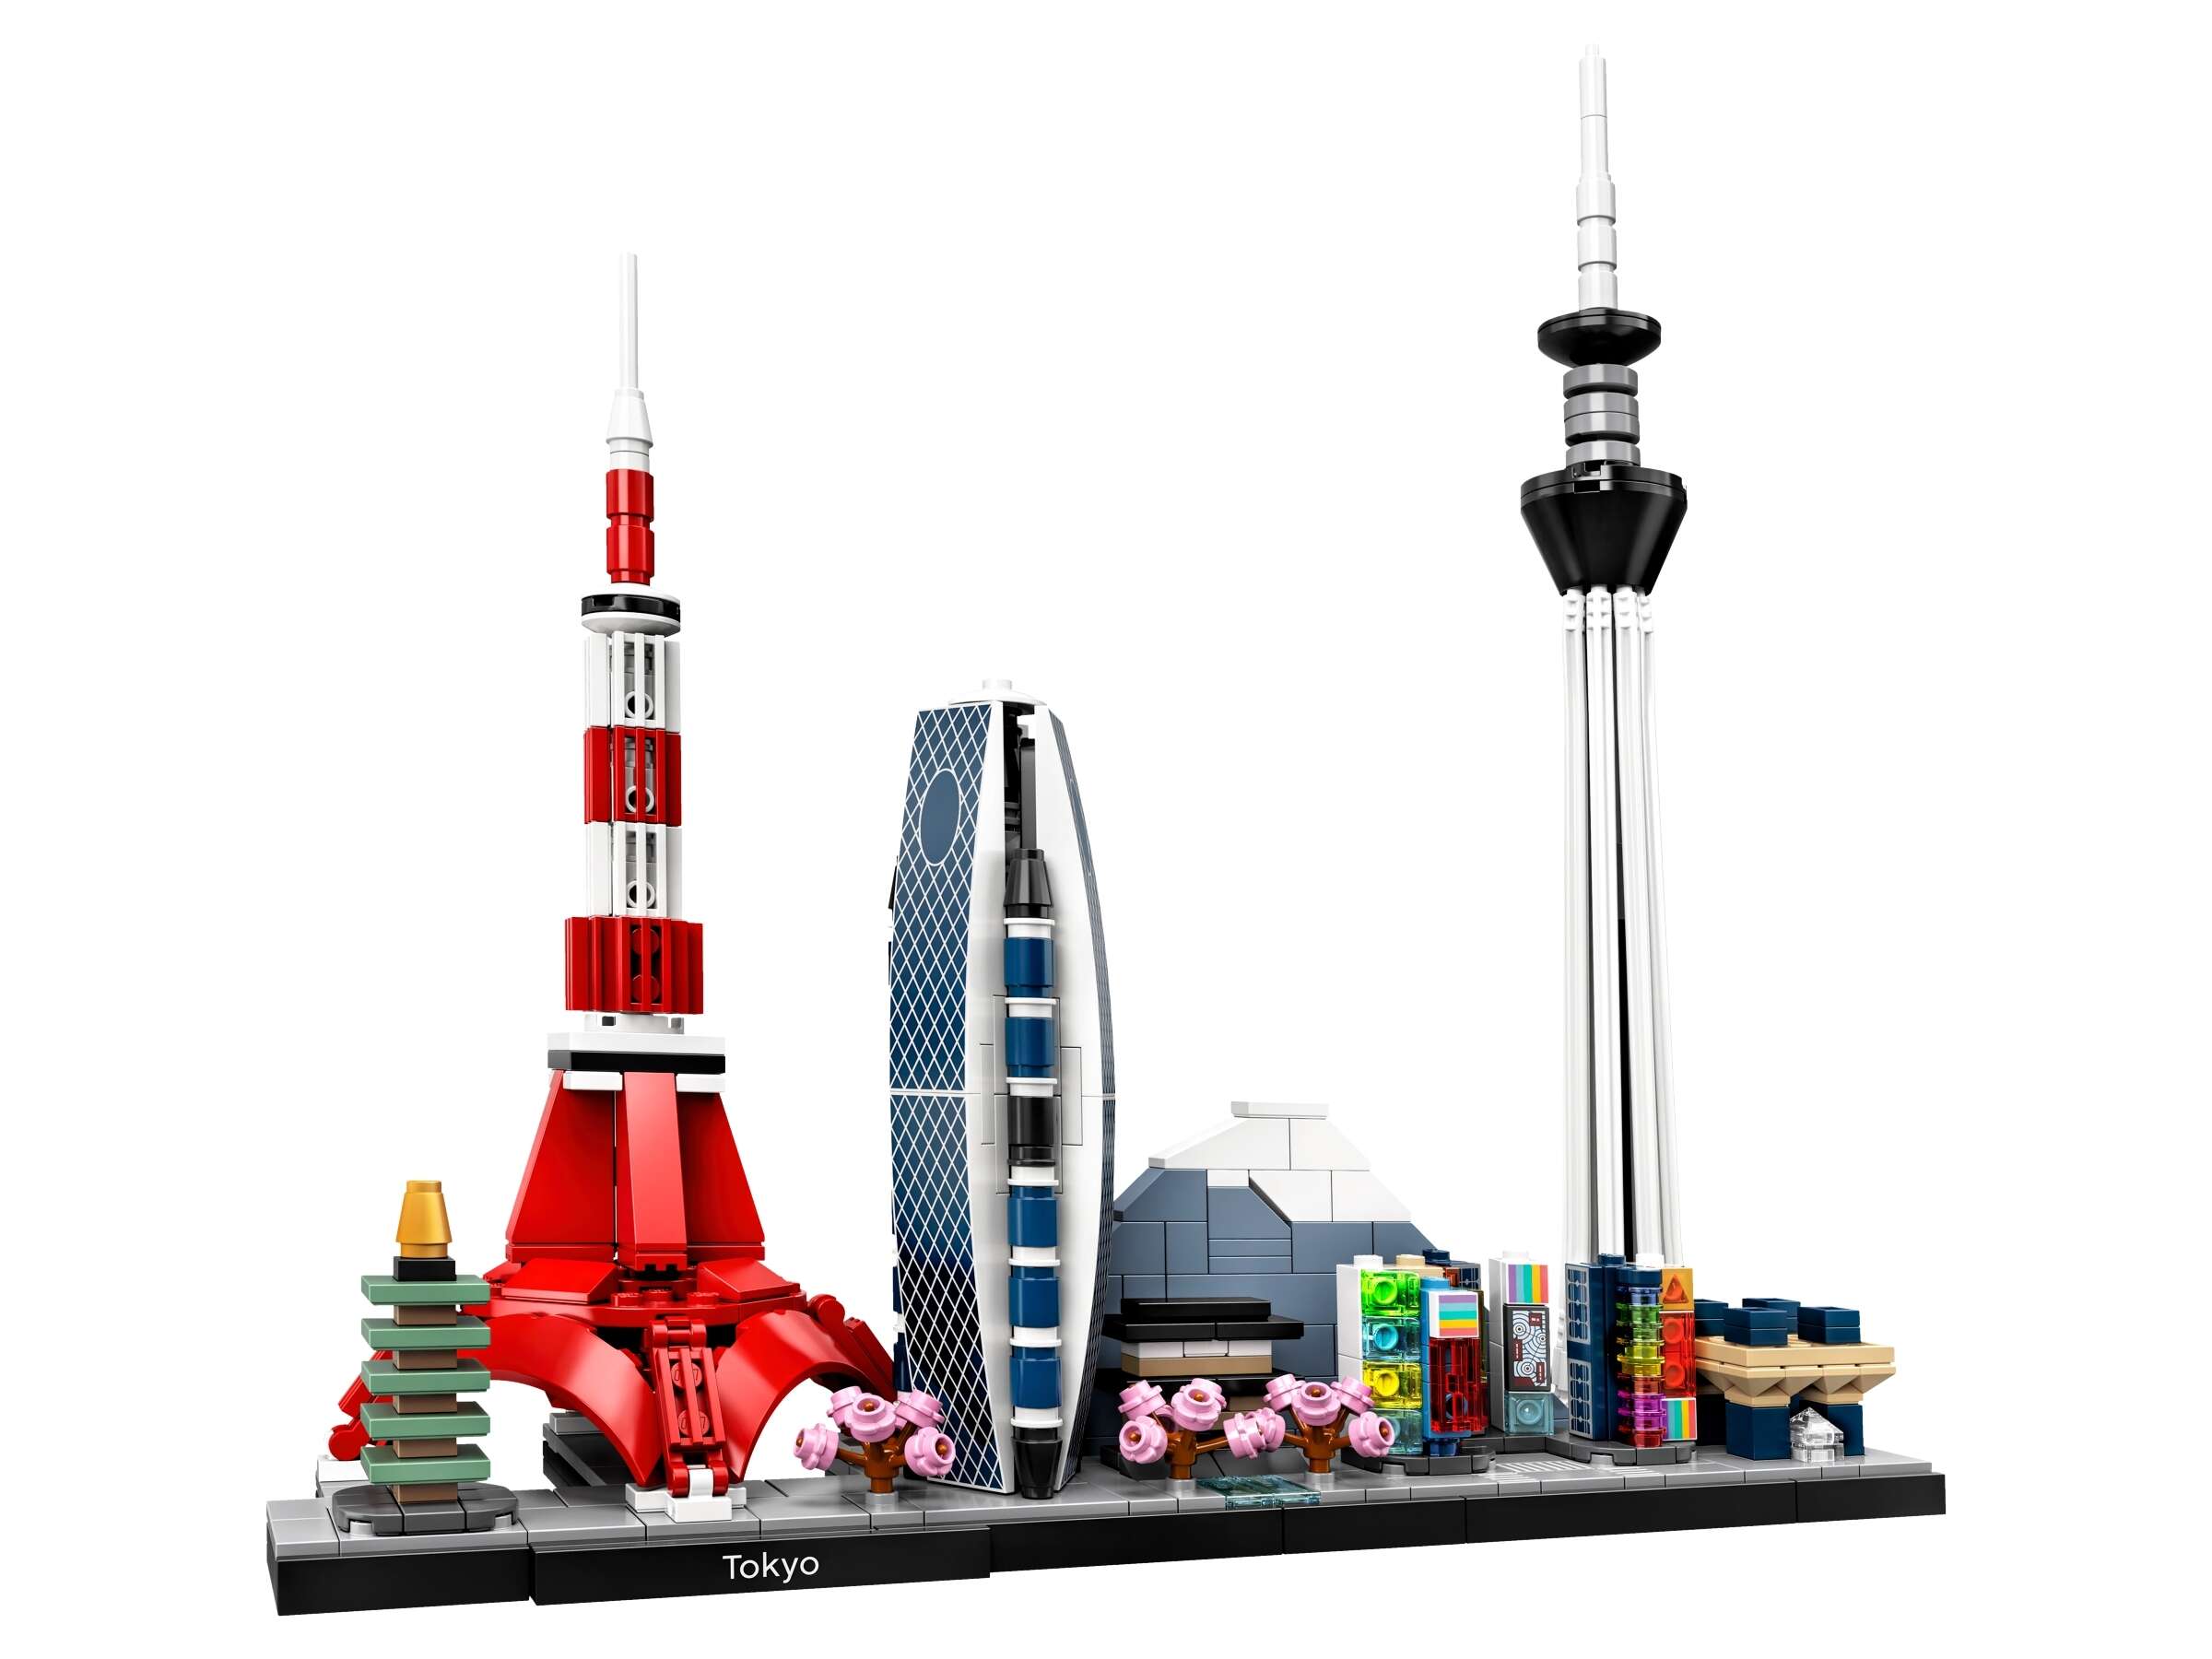 LEGO 21051 Architecture Tokio, Skyline-Kollektion, detailgetreue Modelle